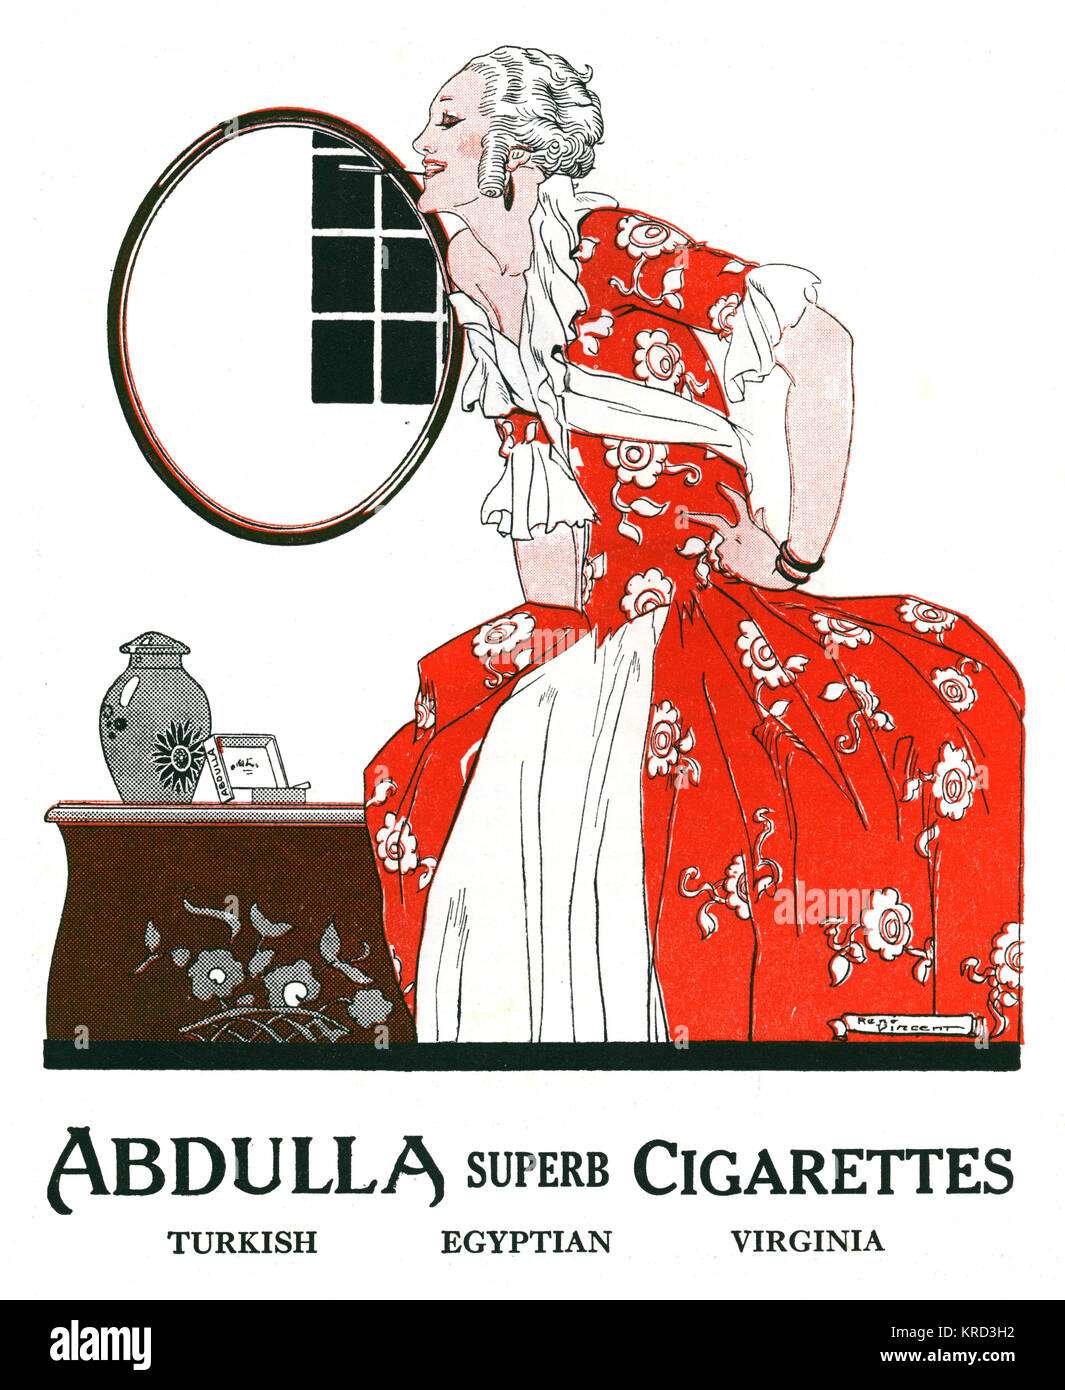 Abdulla Cigarettes advertisement Stock Photo